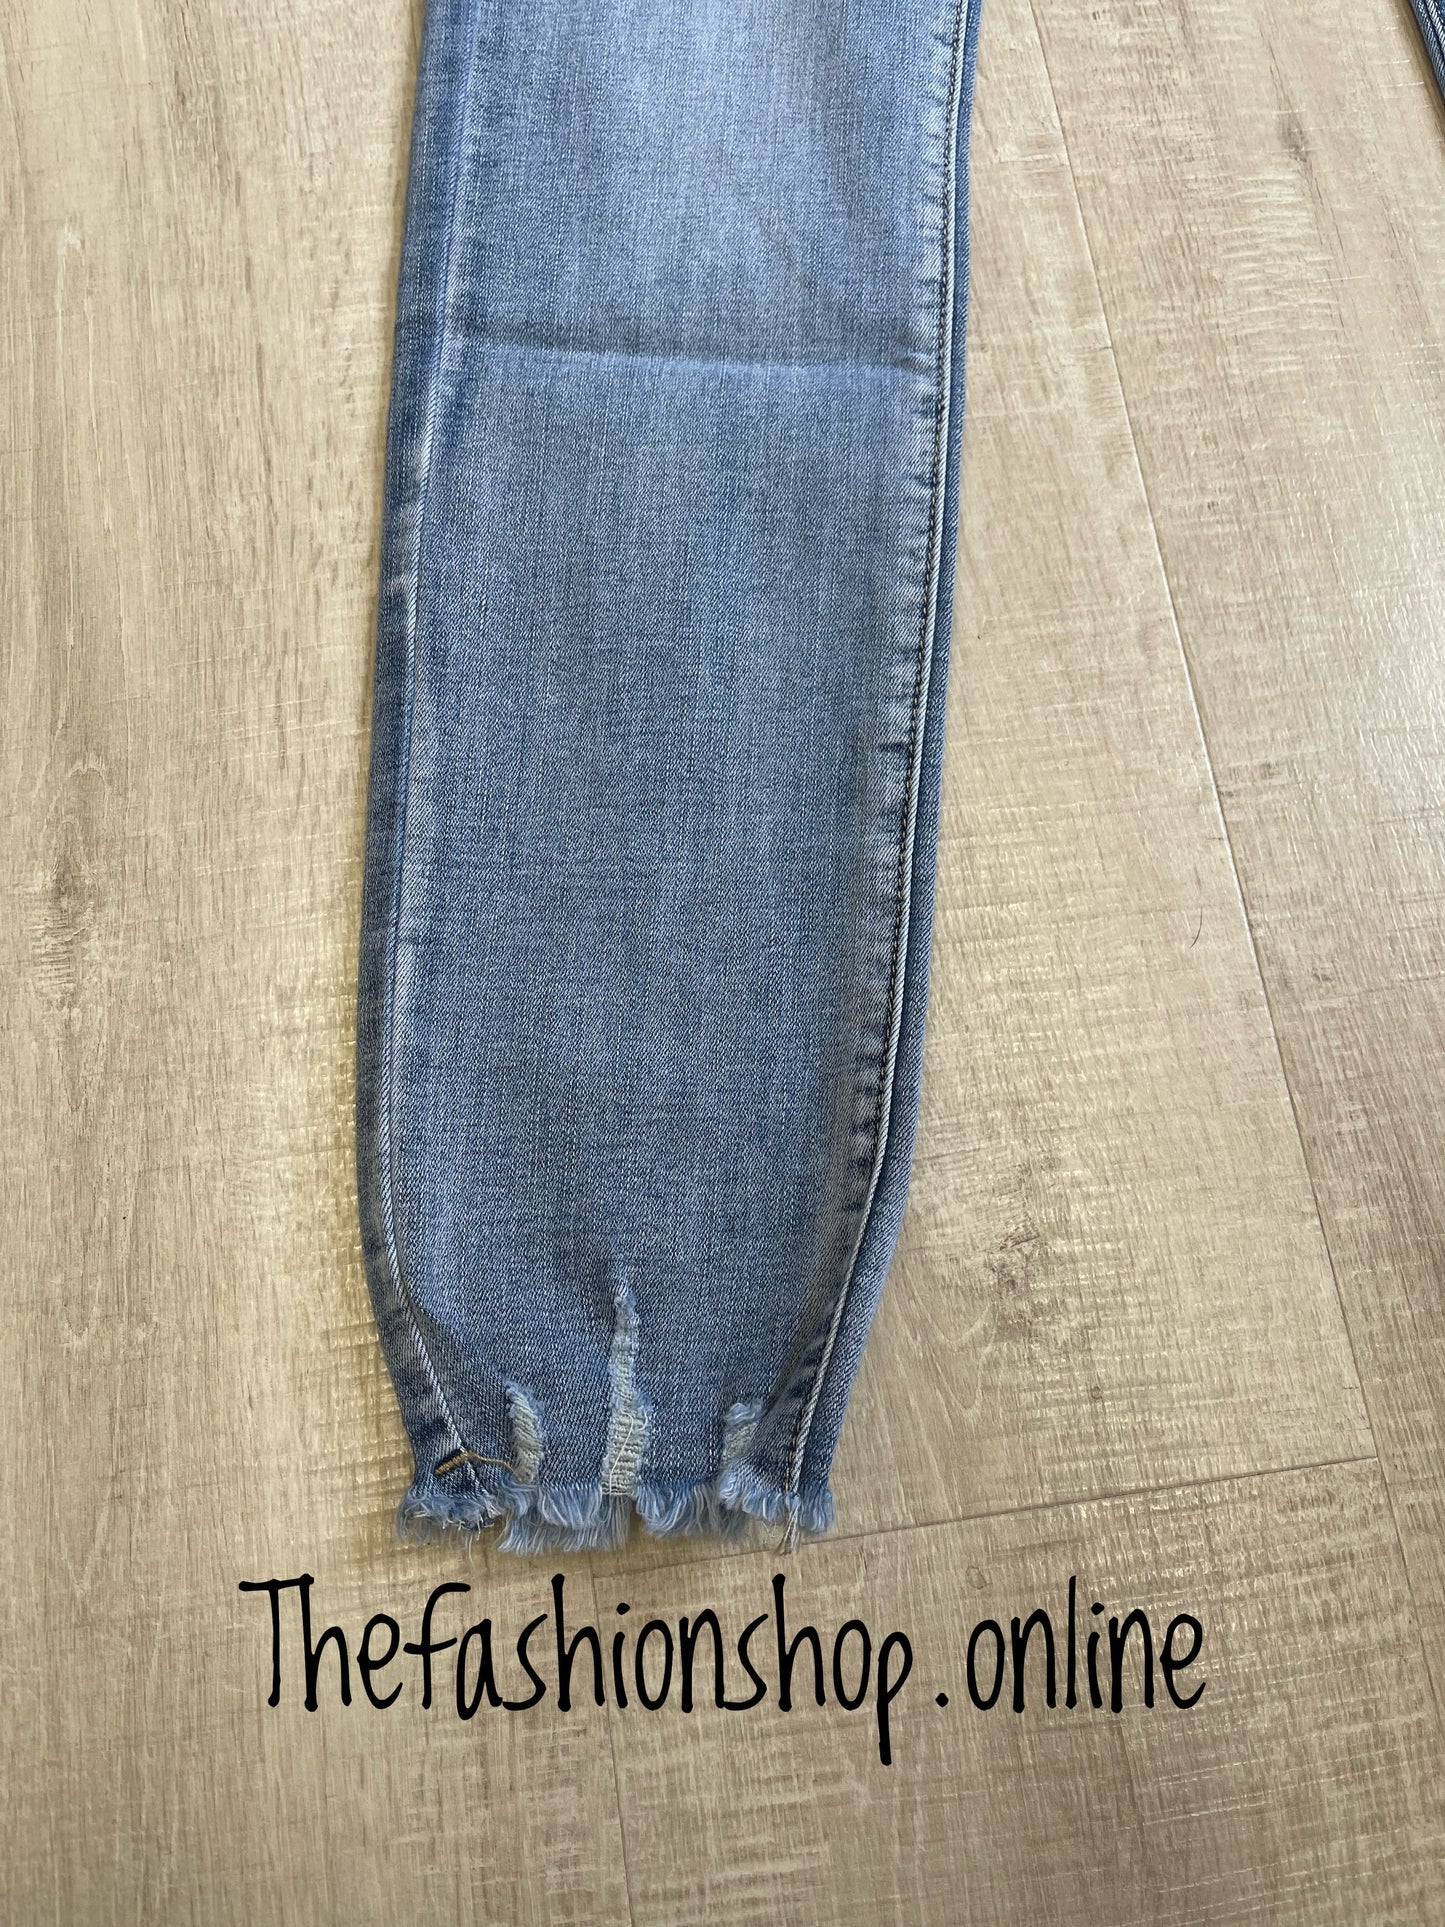 Denim blue stonewash premium ladies fit frayed edge jeans sizes 10-20